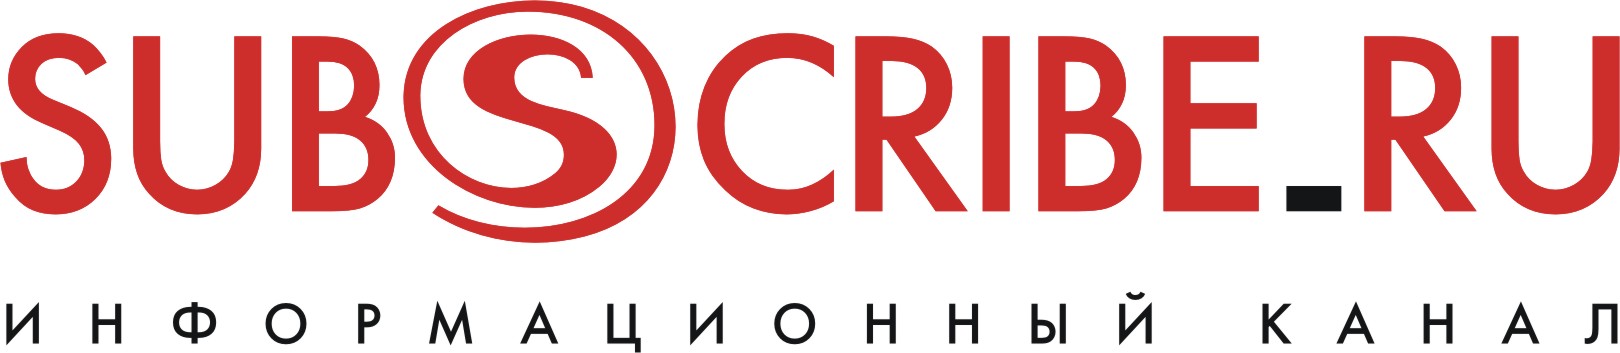 Agrotechpro ru. Сабскрайб ру. Subscribe.ru. Subscribe.ru logo. Логотип rucompas.